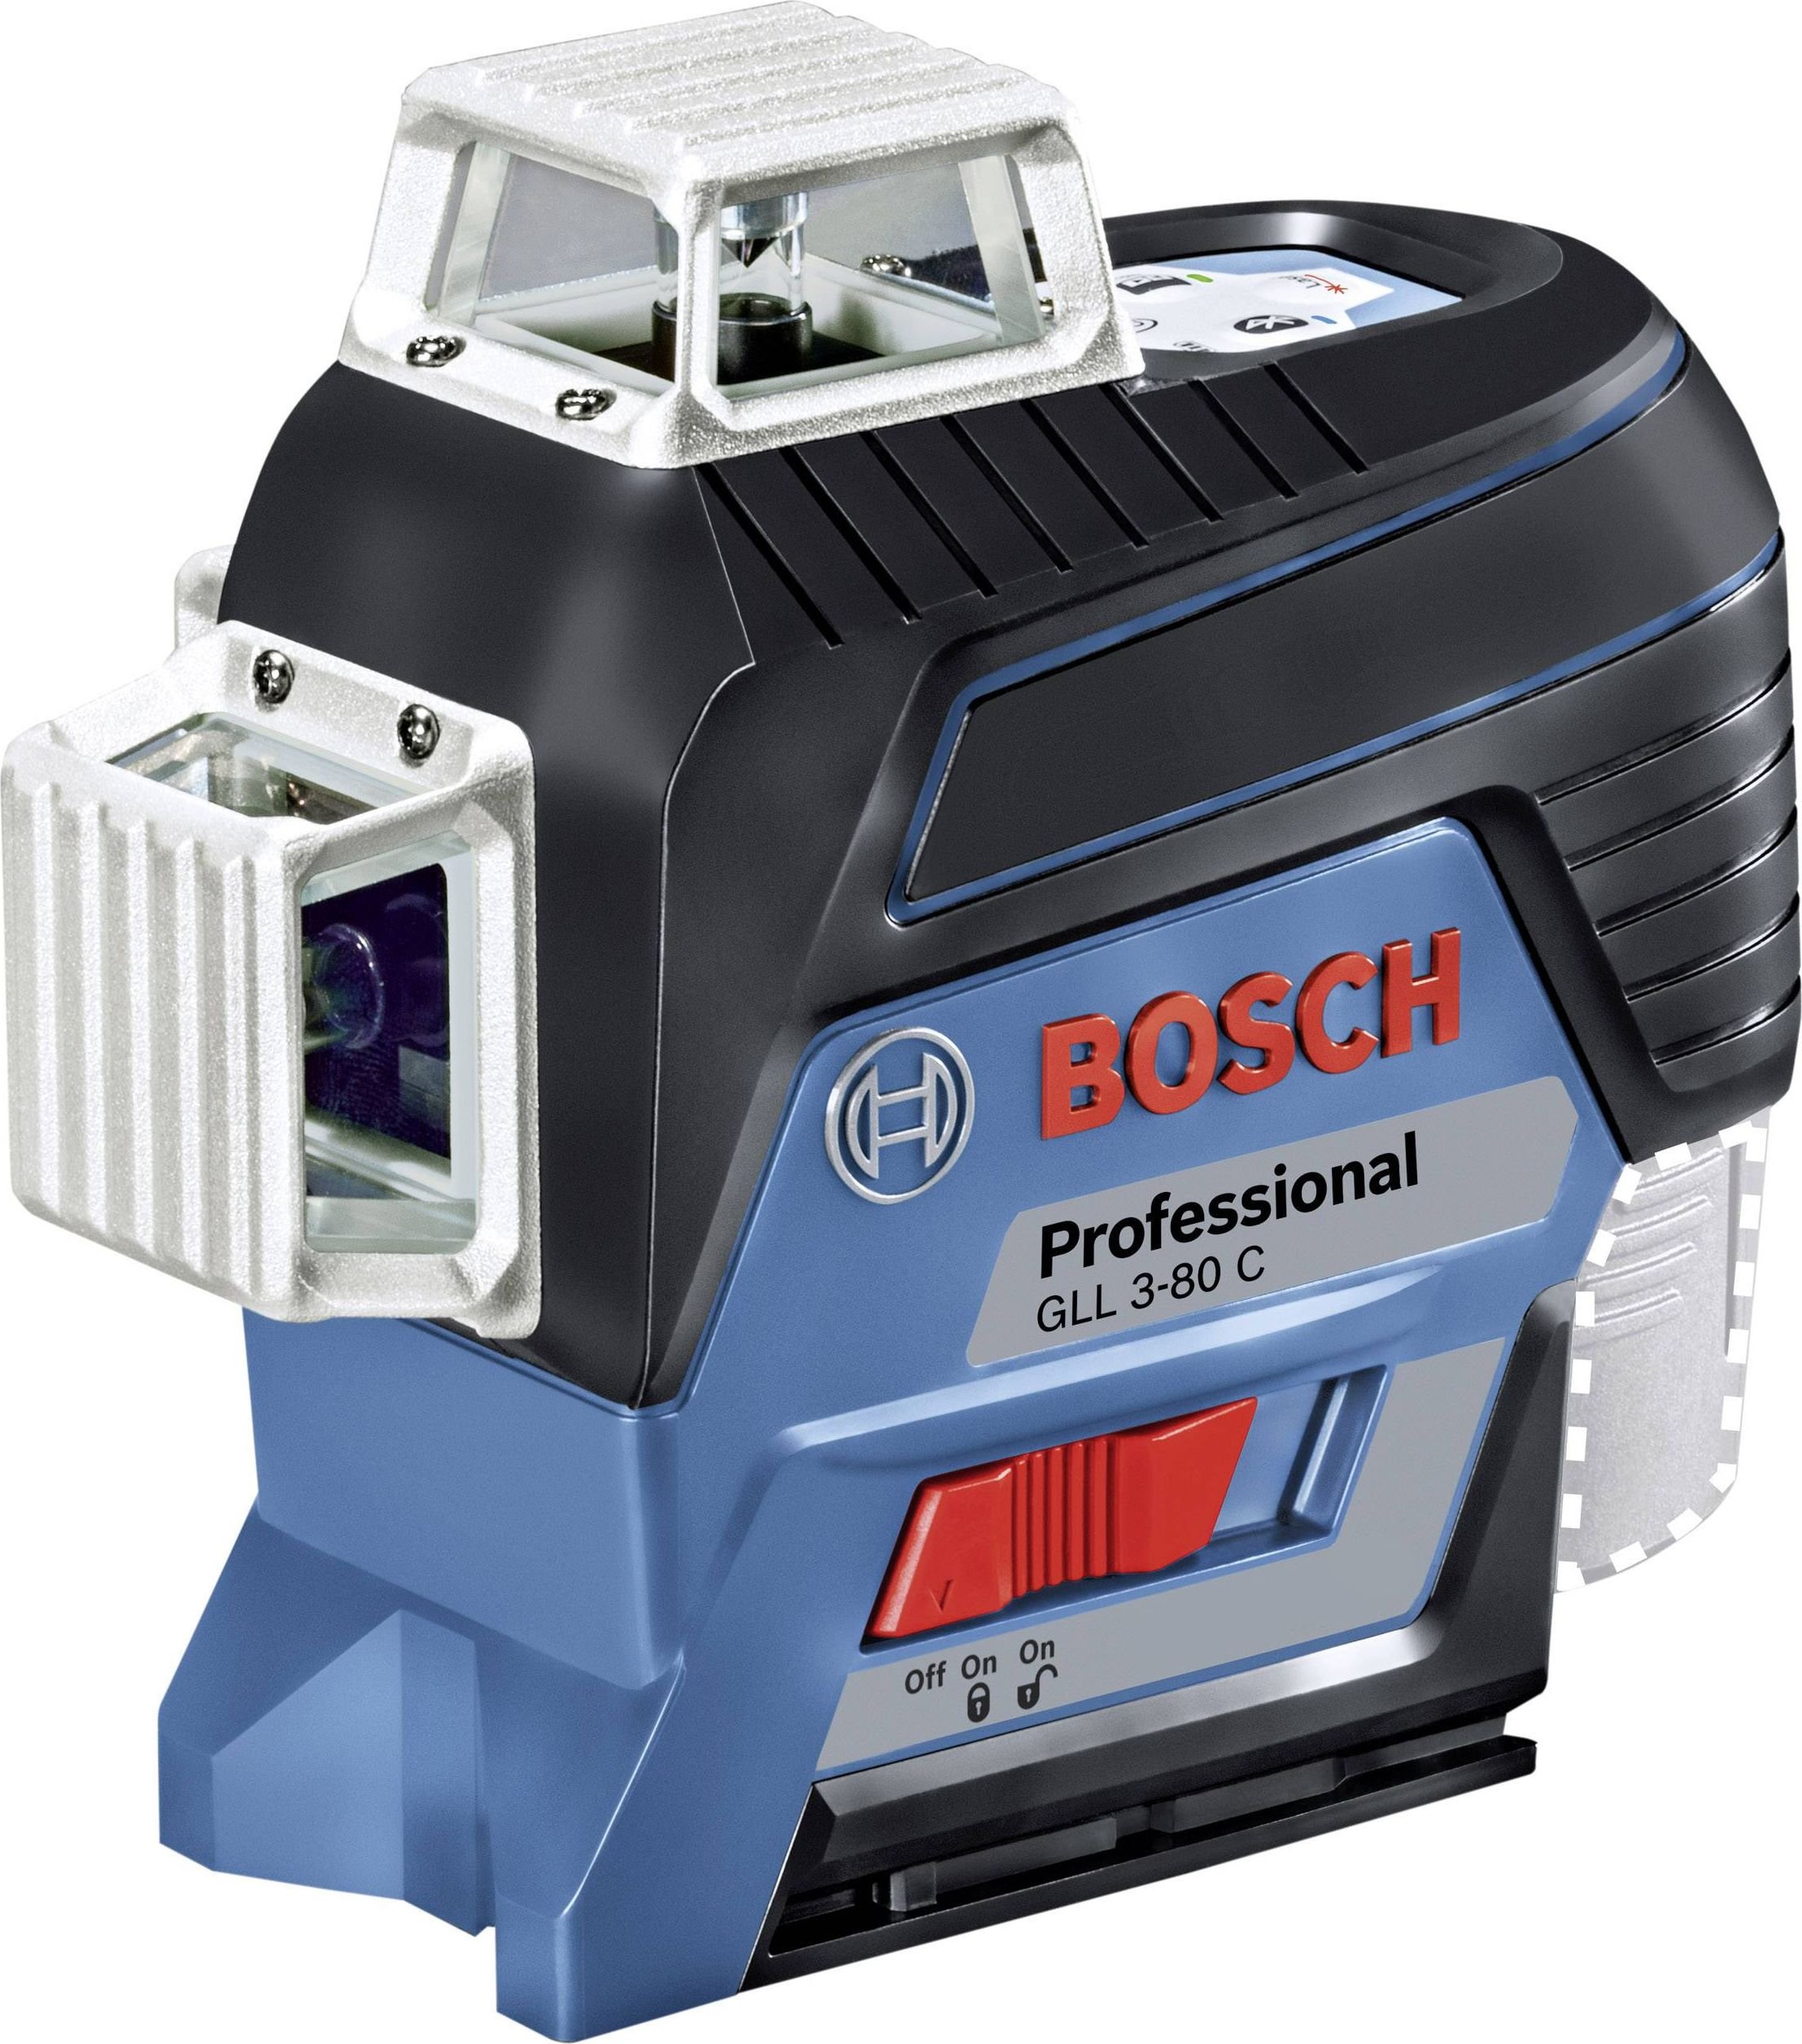 Bosch GLL 3-80 C Professional Line level 30 m 3165140888288